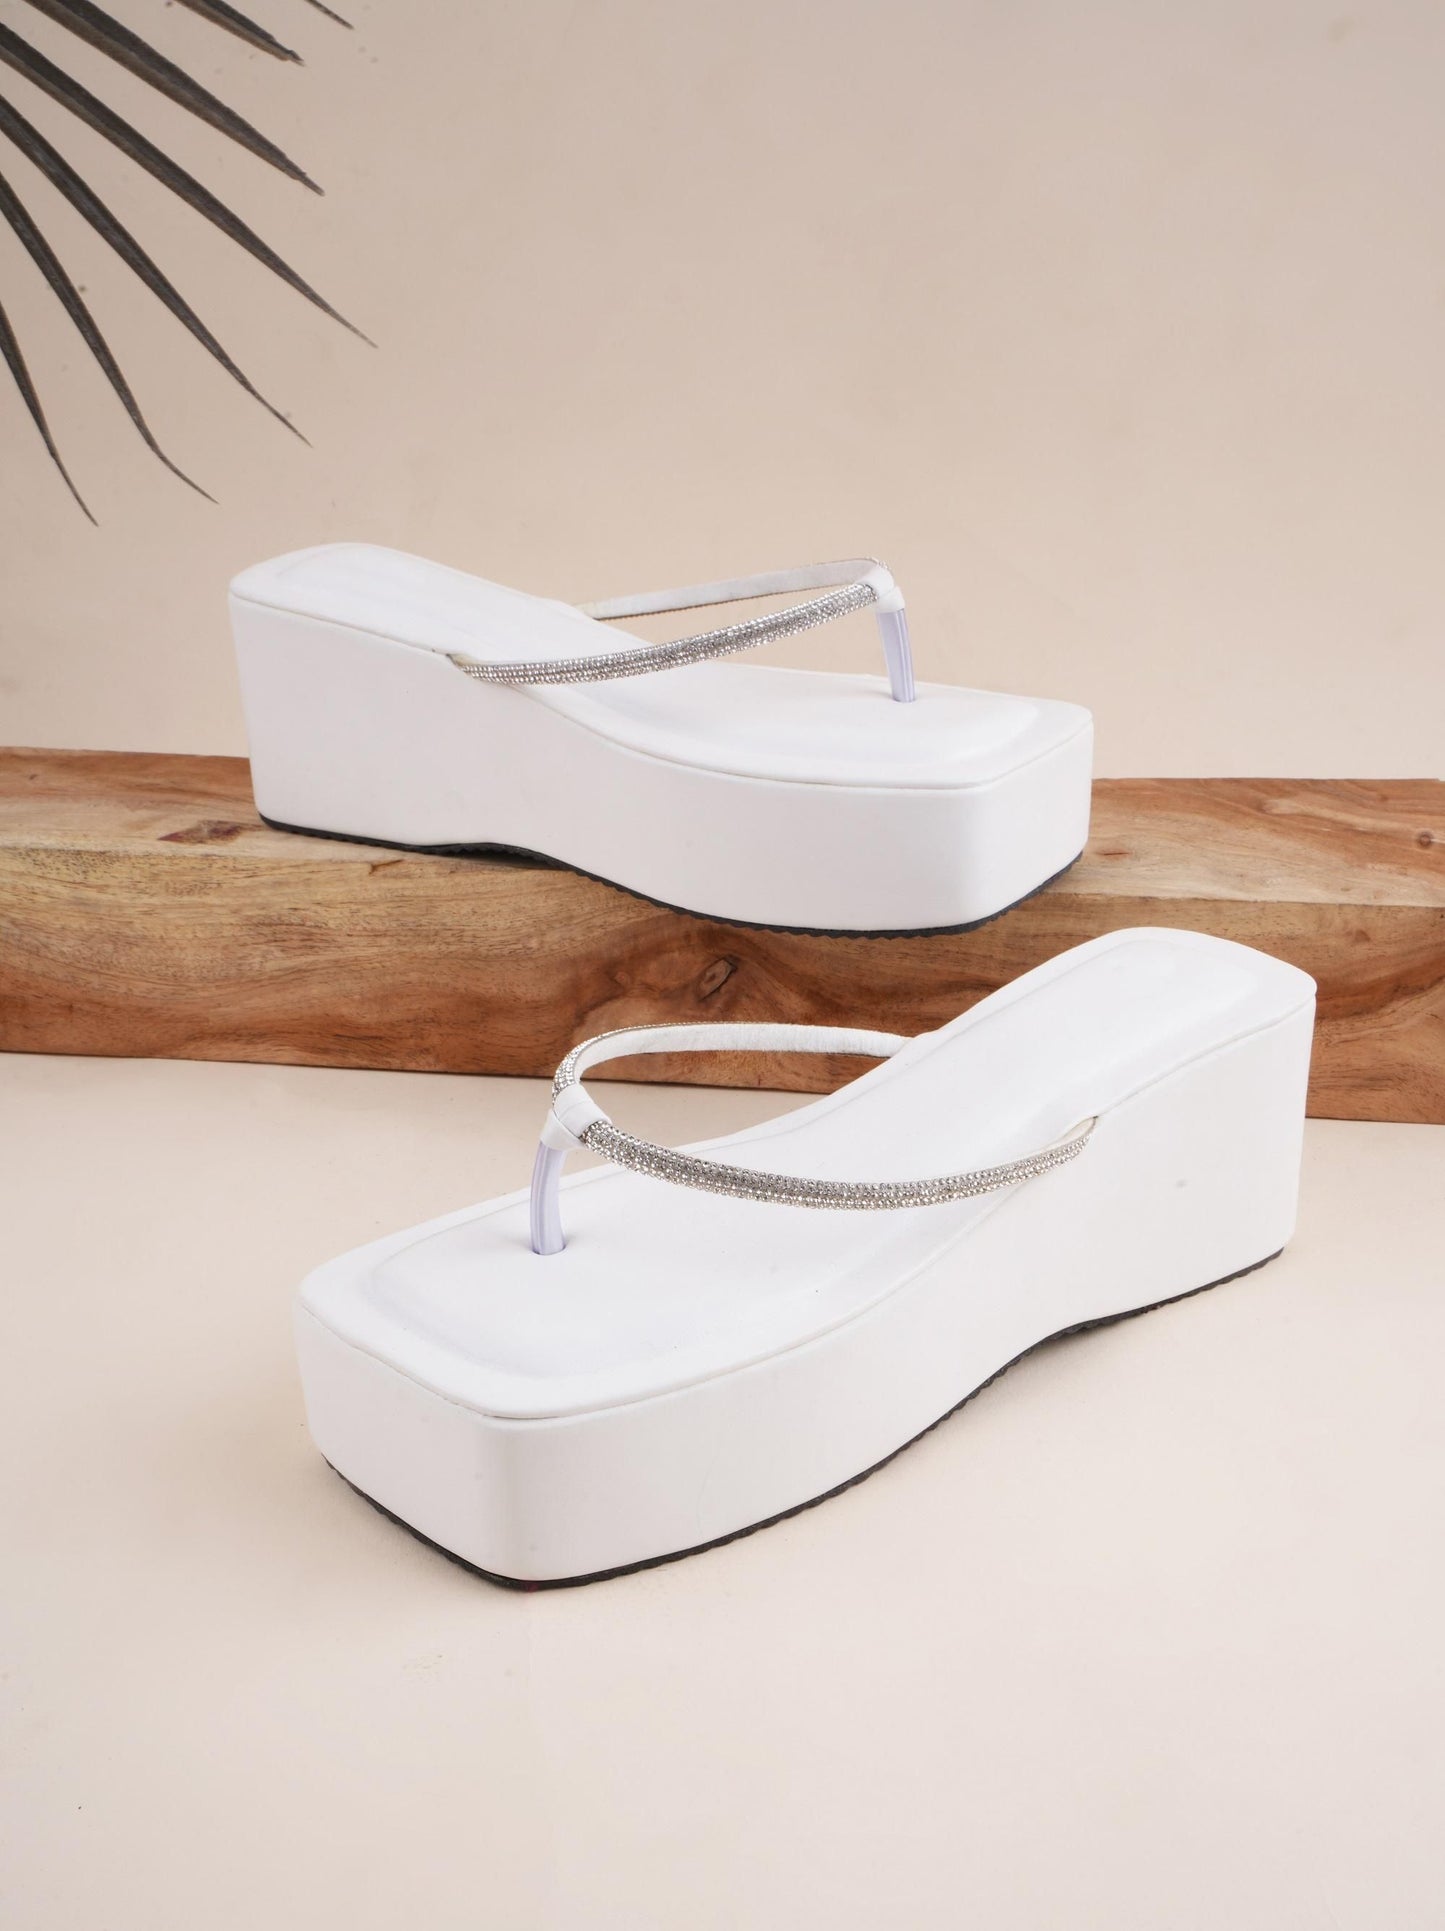 Stylish Platform Heel Sandal For Womens